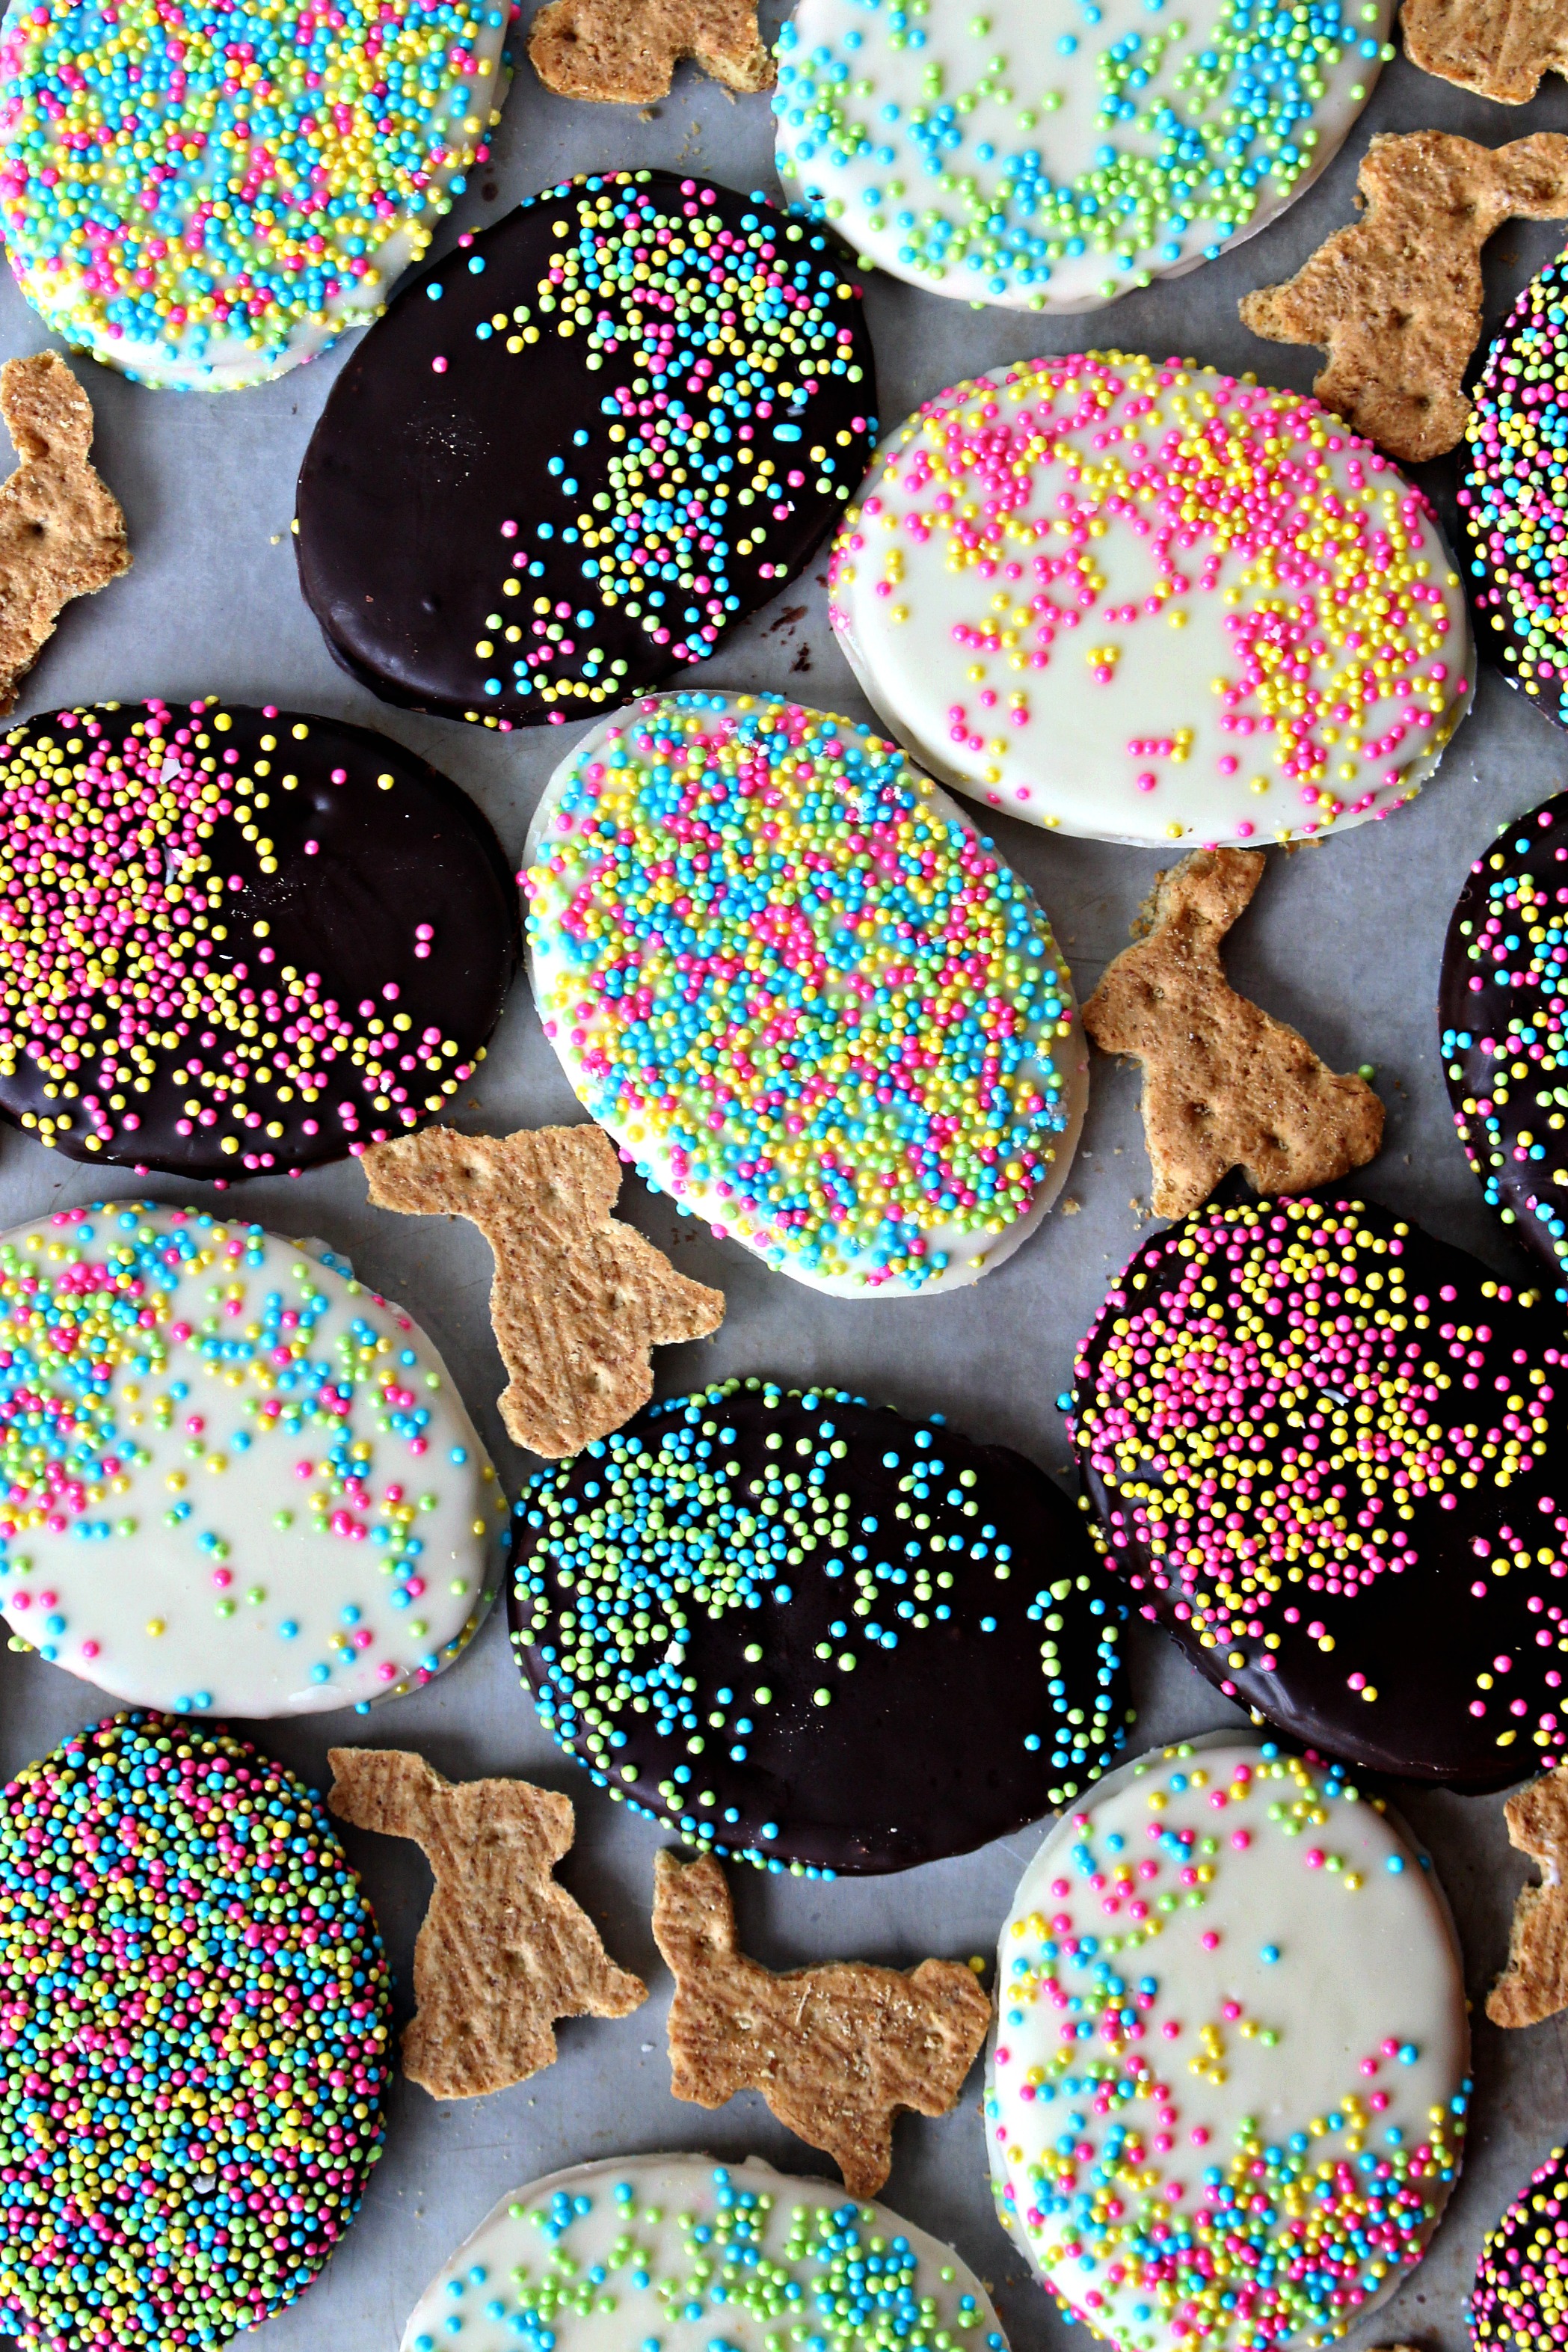 Chocolate Covered Graham Cracker Easter Eggs covered in pastel sprinkles.